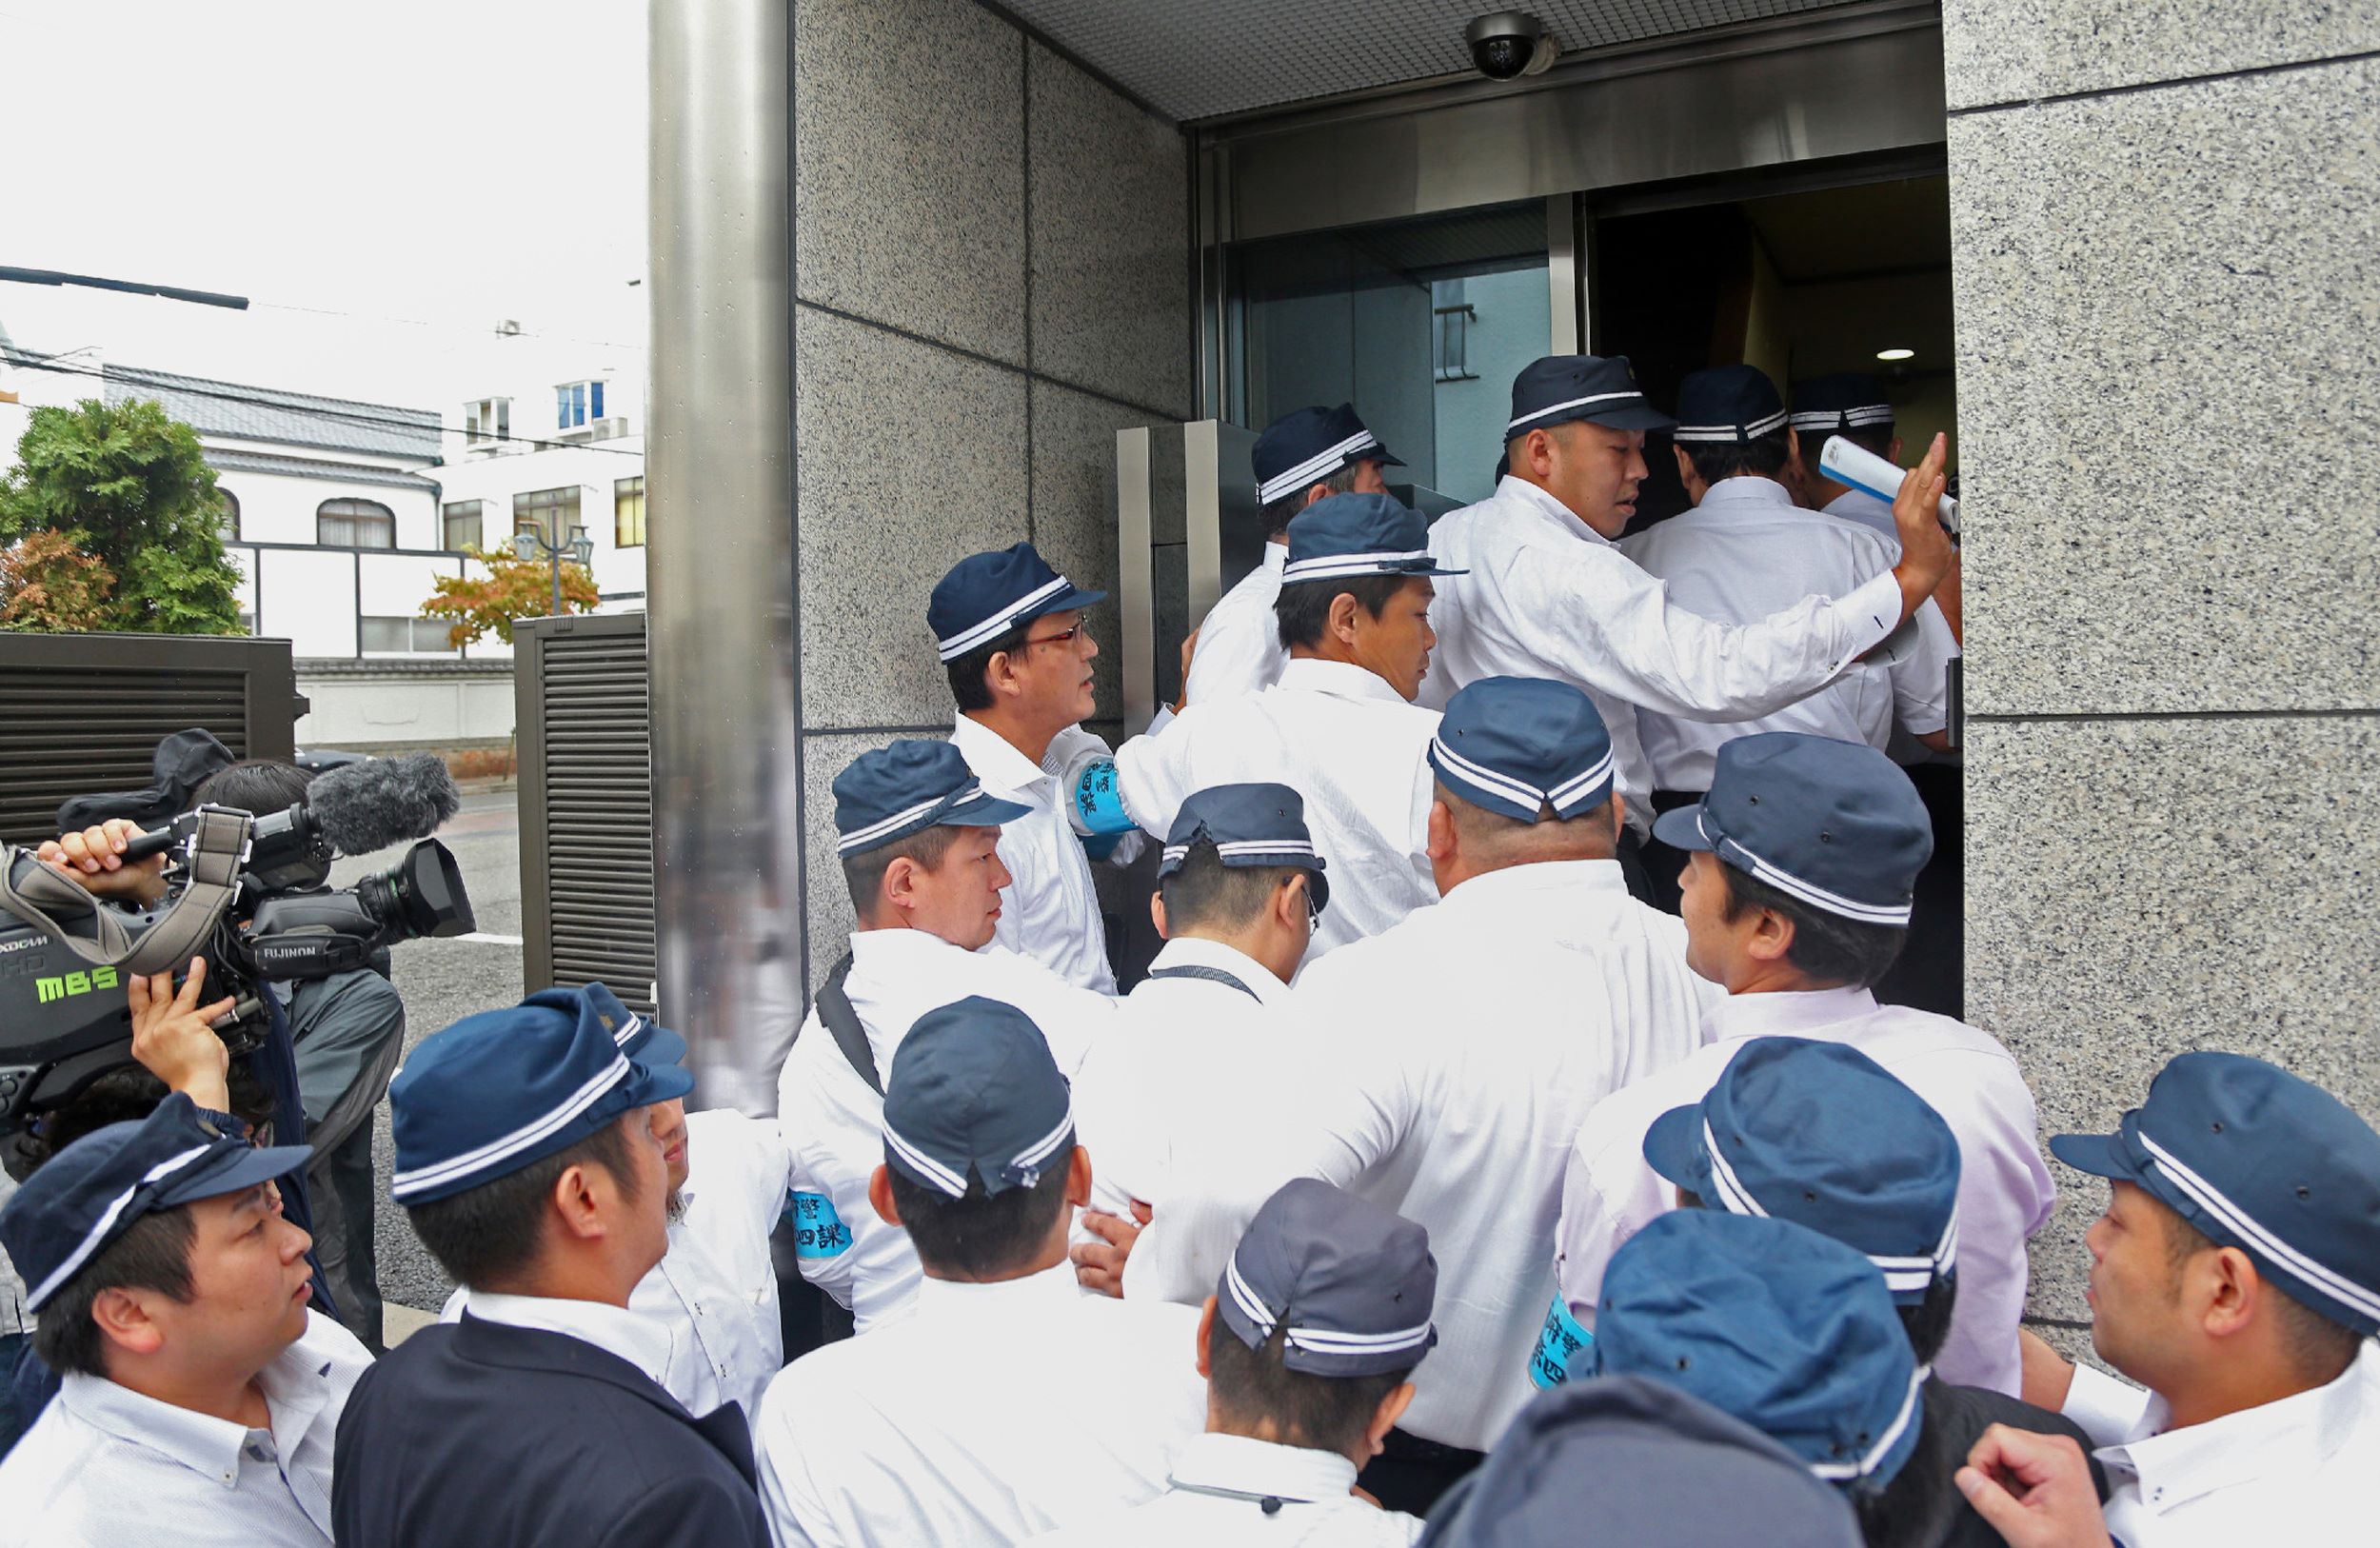 Japan's yakuza gangs will be extinct in 50 years, says ex-member amid  police crackdown